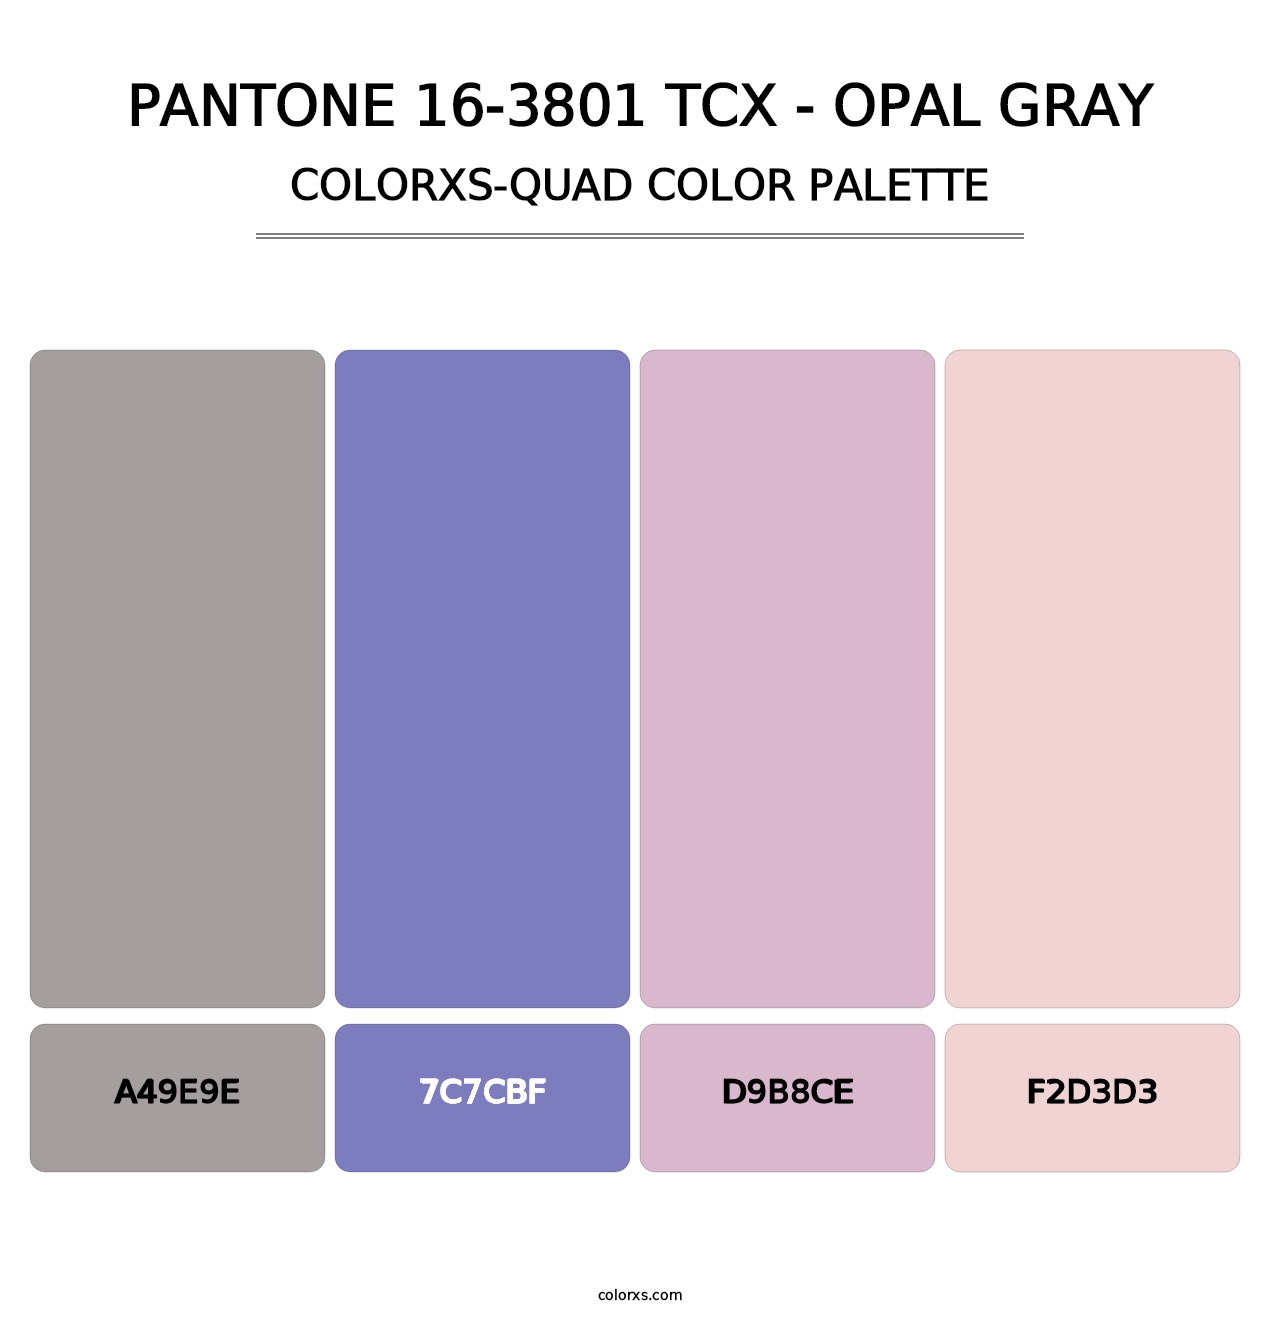 PANTONE 16-3801 TCX - Opal Gray - Colorxs Quad Palette